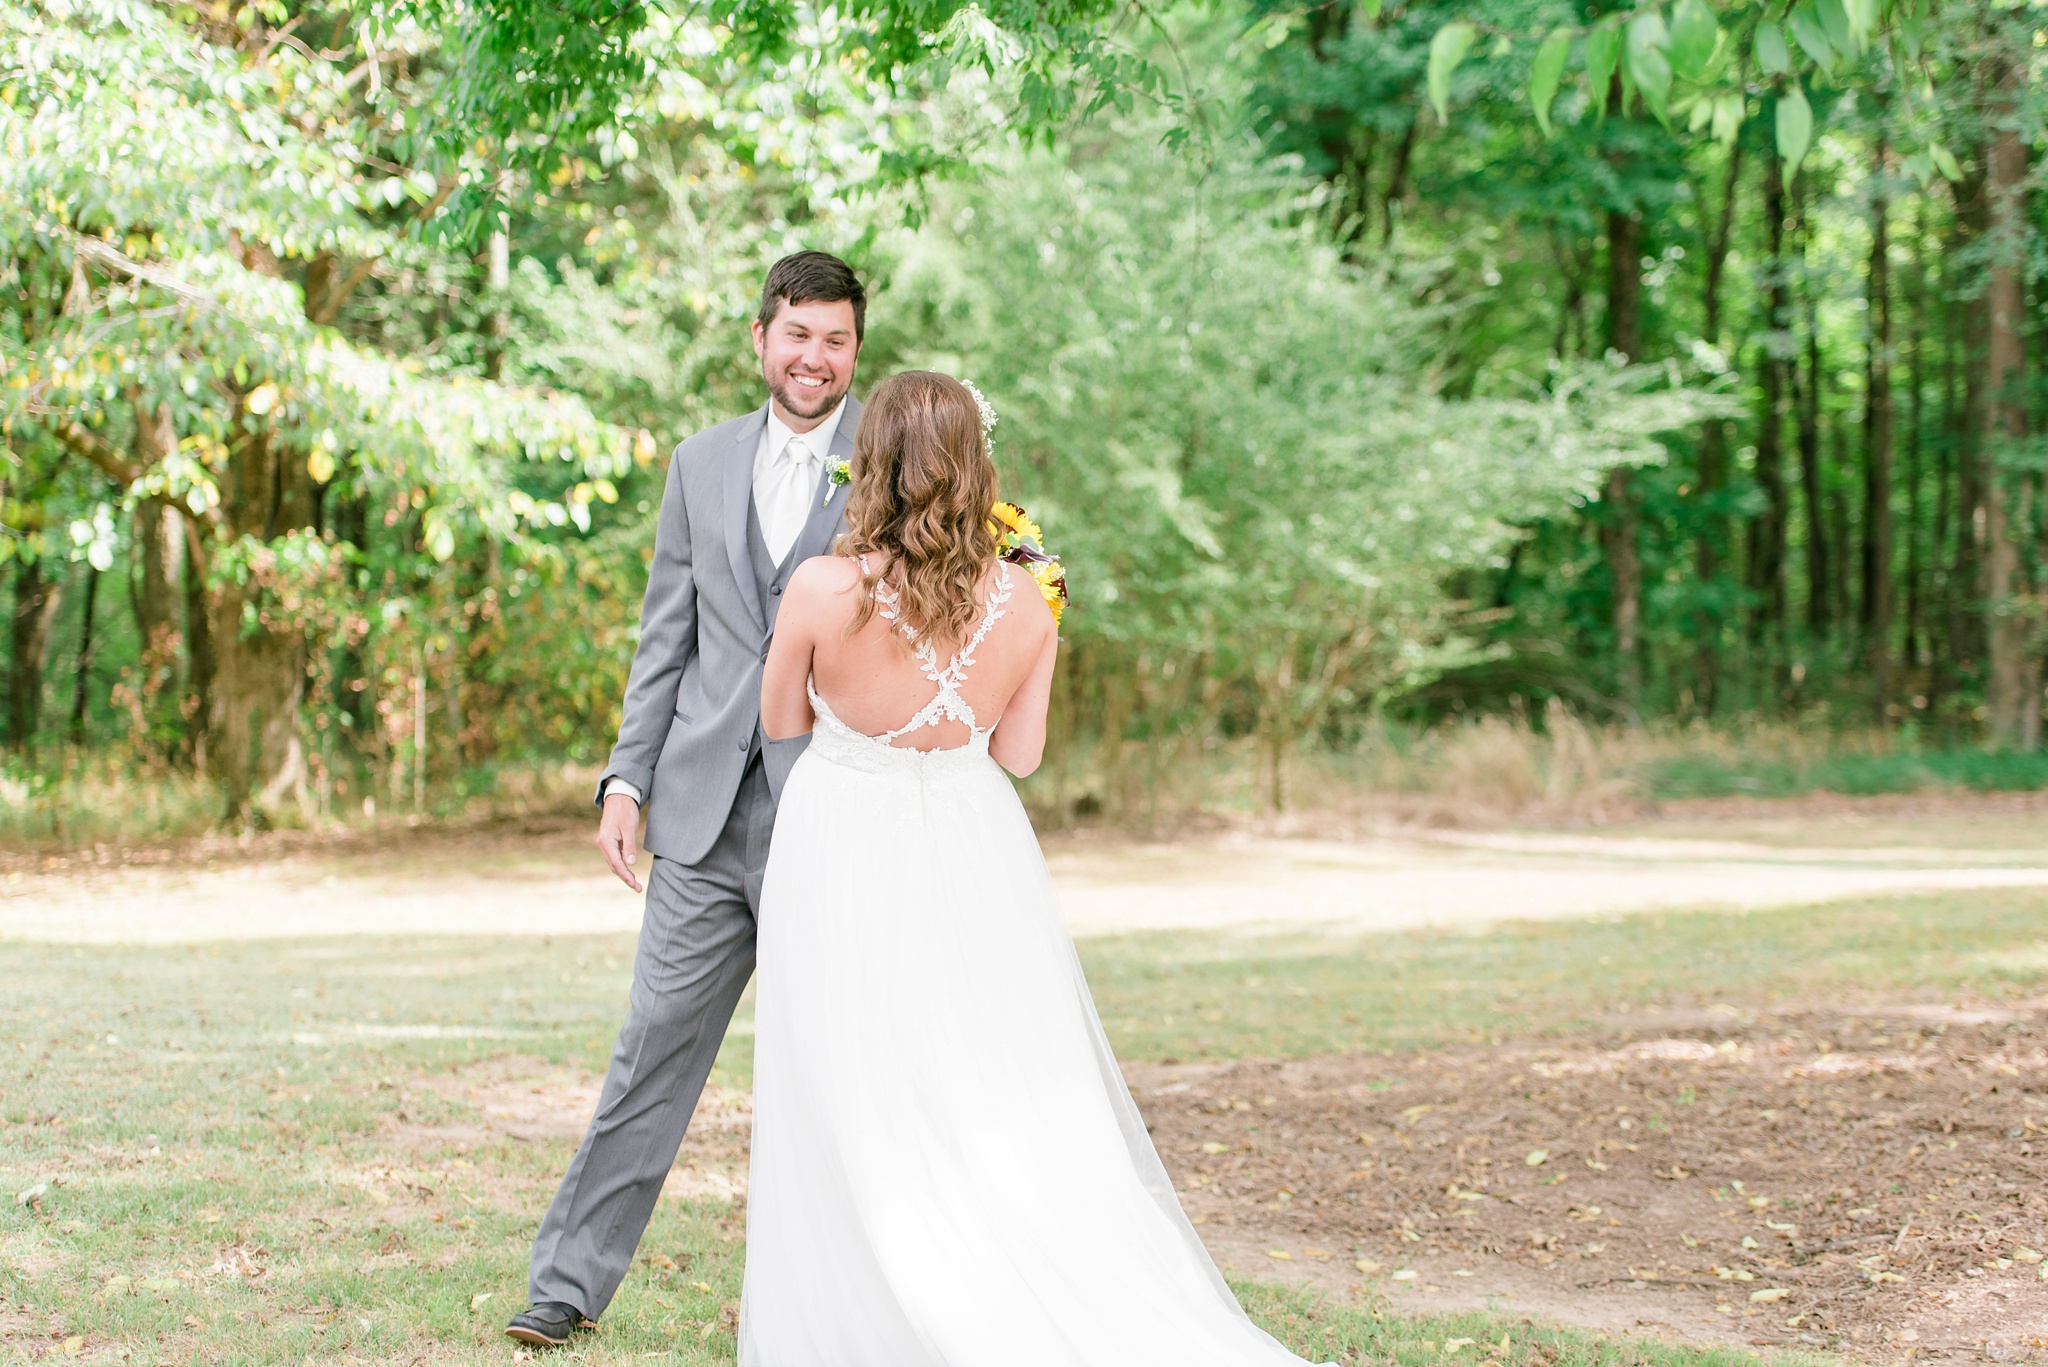 Sonnet House Summer Wedding | Birmingham Alabama Wedding Photographers_0024.jpg